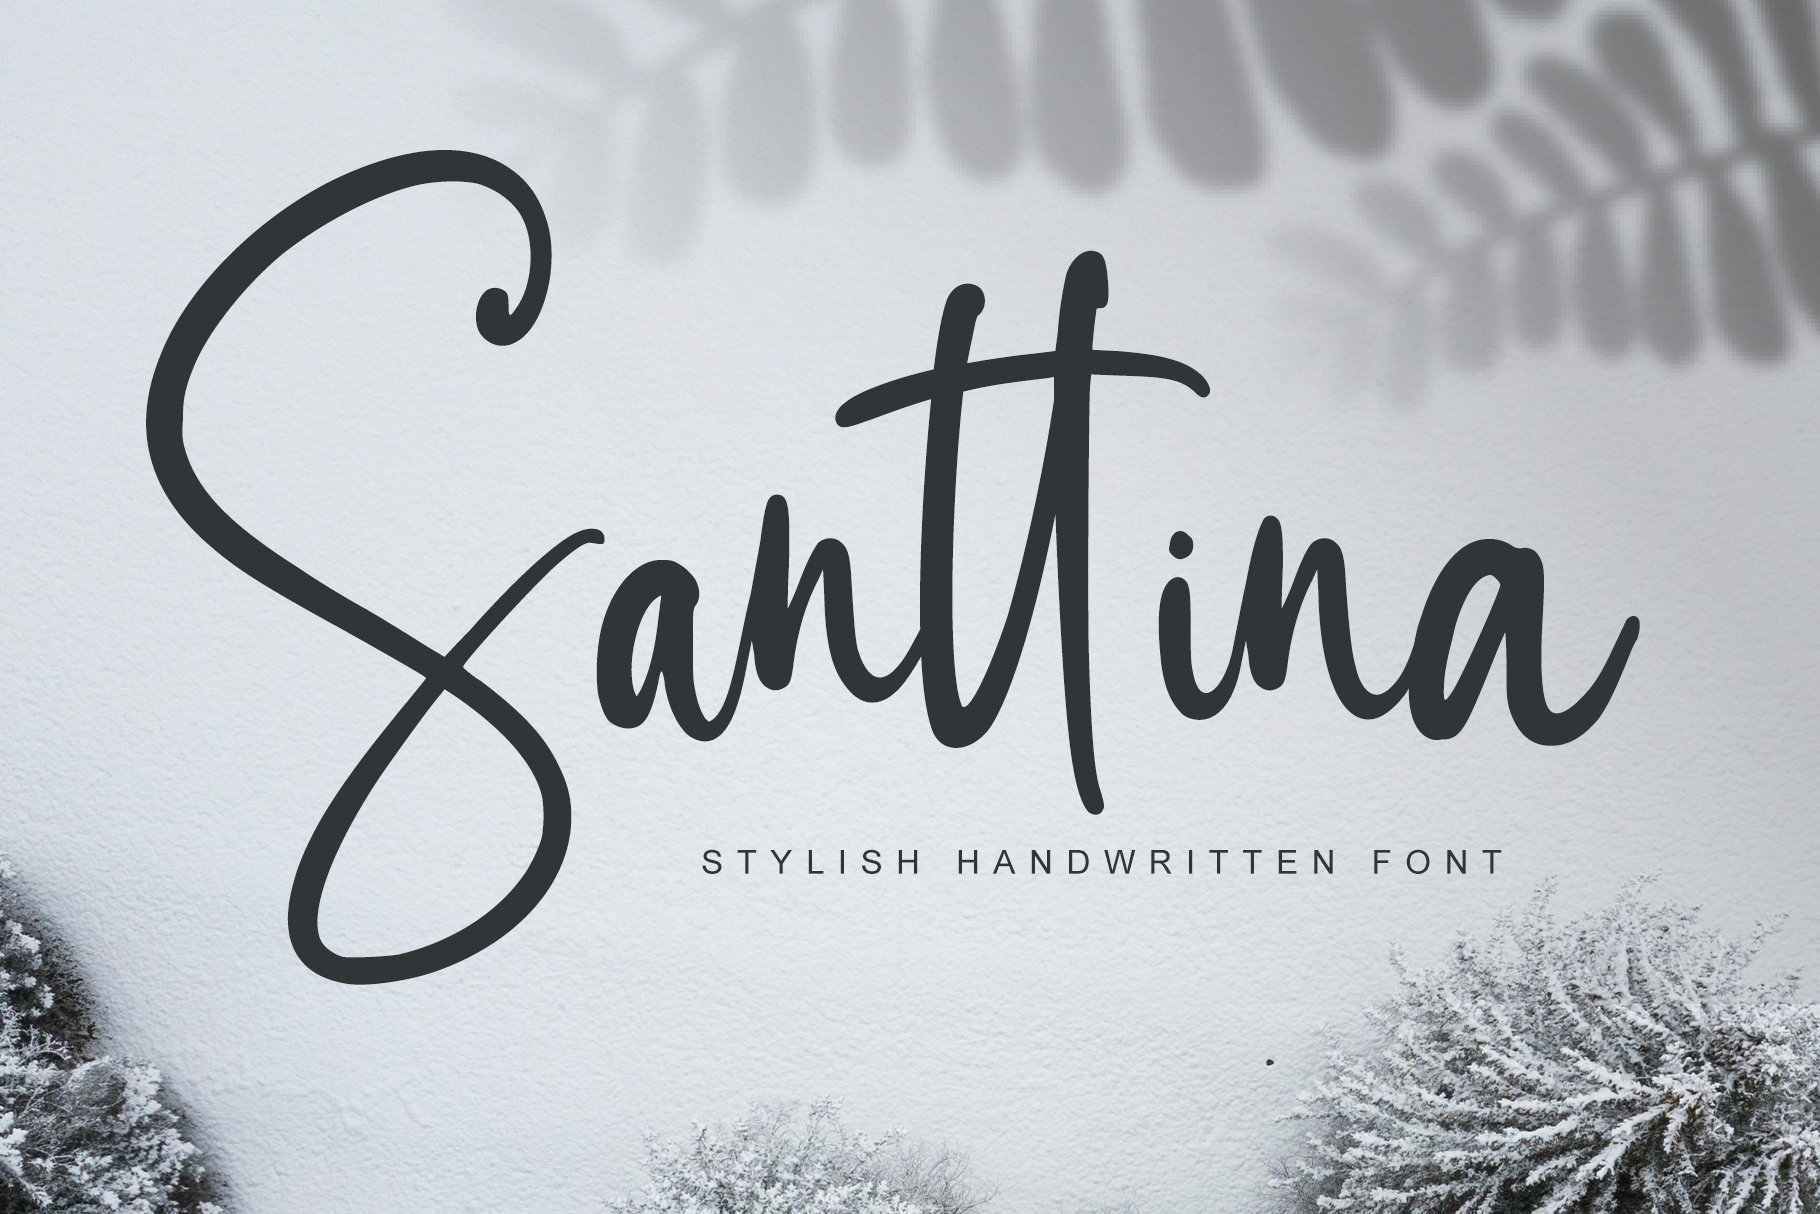 Santtina - Stylish handwritten font cover image.